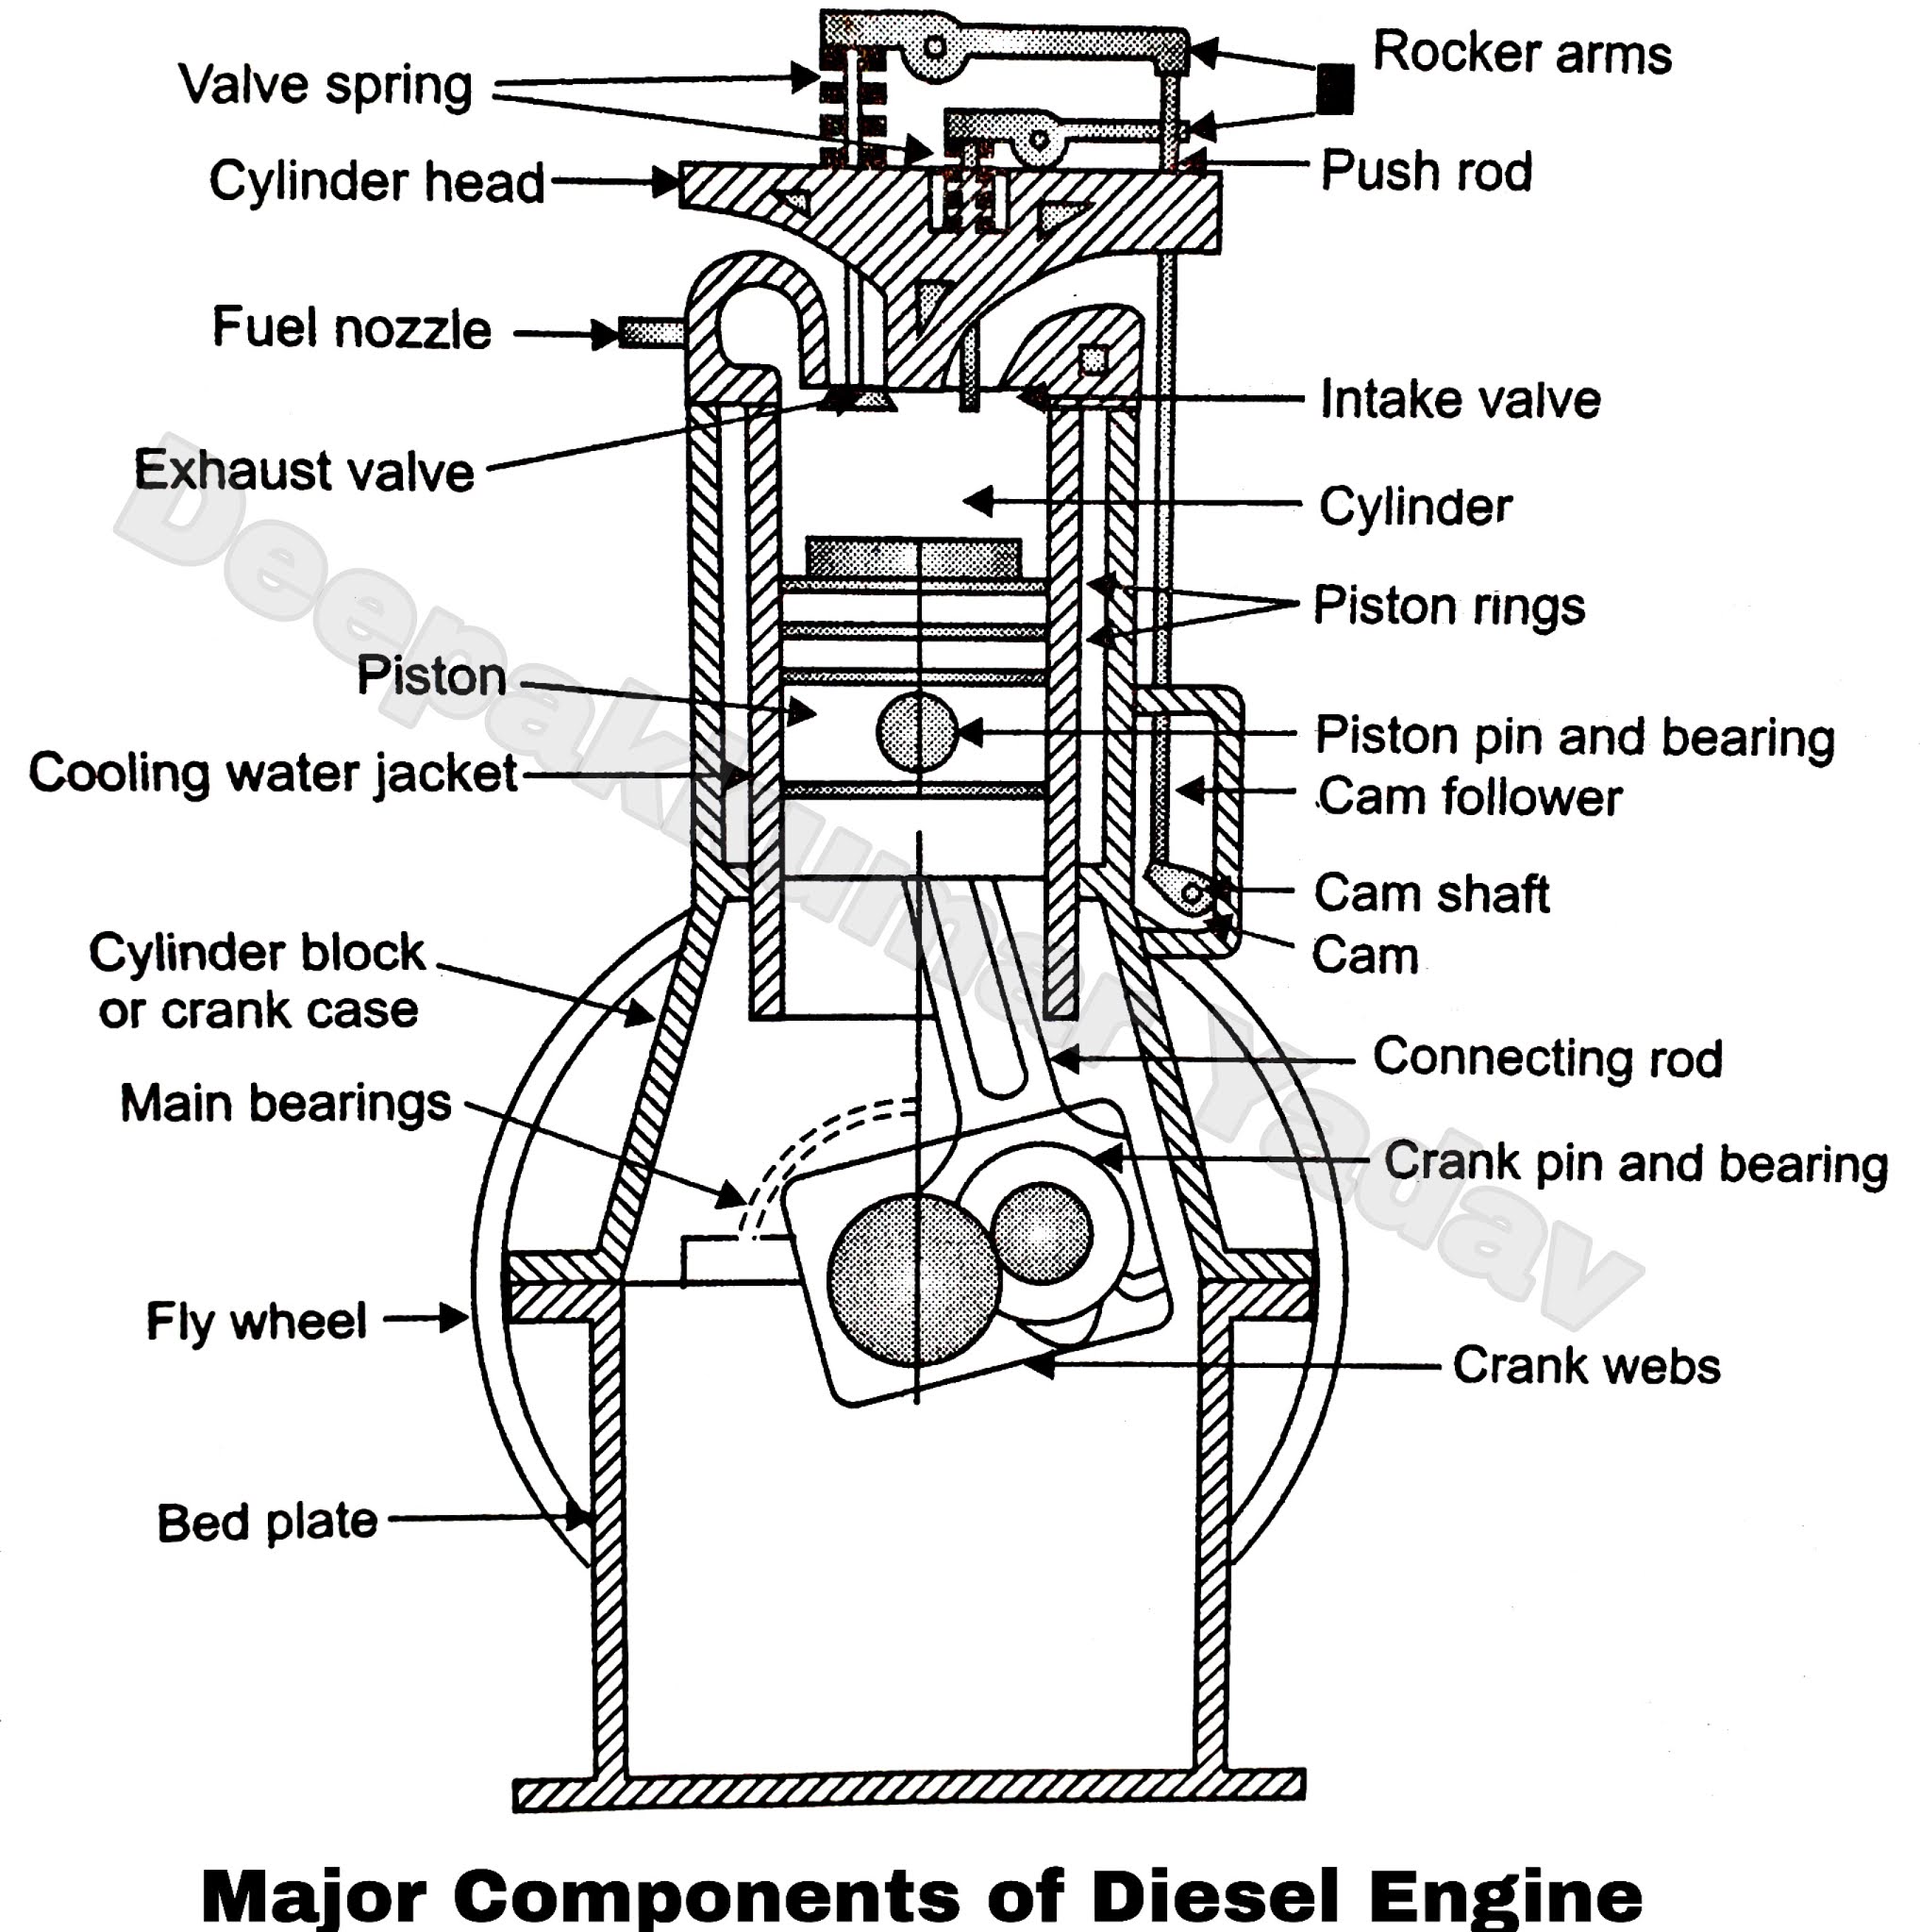 Weight of 4 cylinder engine